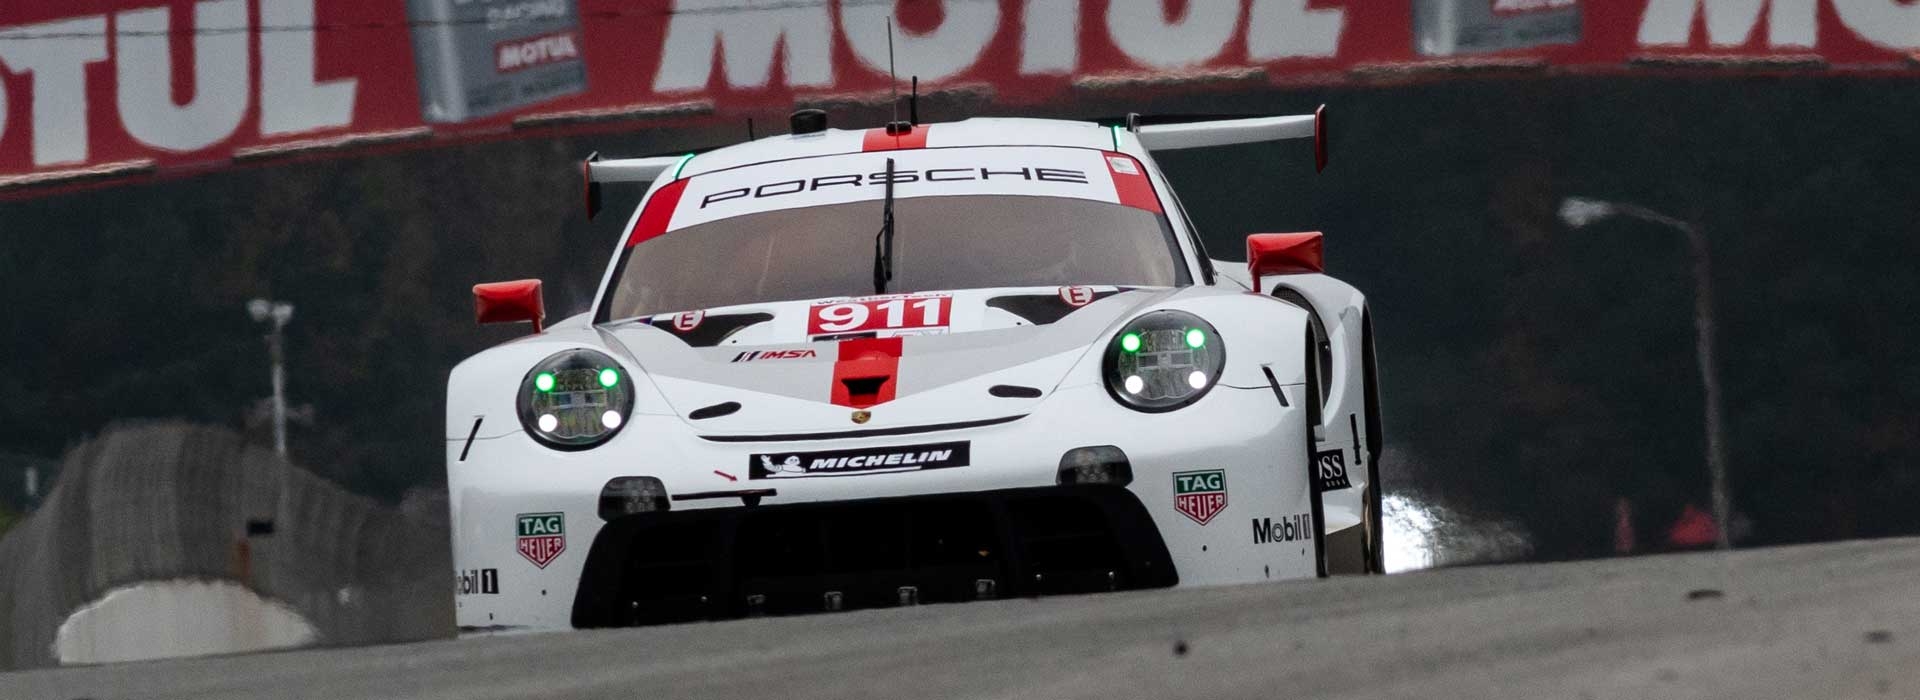 No. 911 Porsche, No. 63 Ferrari Score Much-Needed Wins at Motul Petit Le Mans